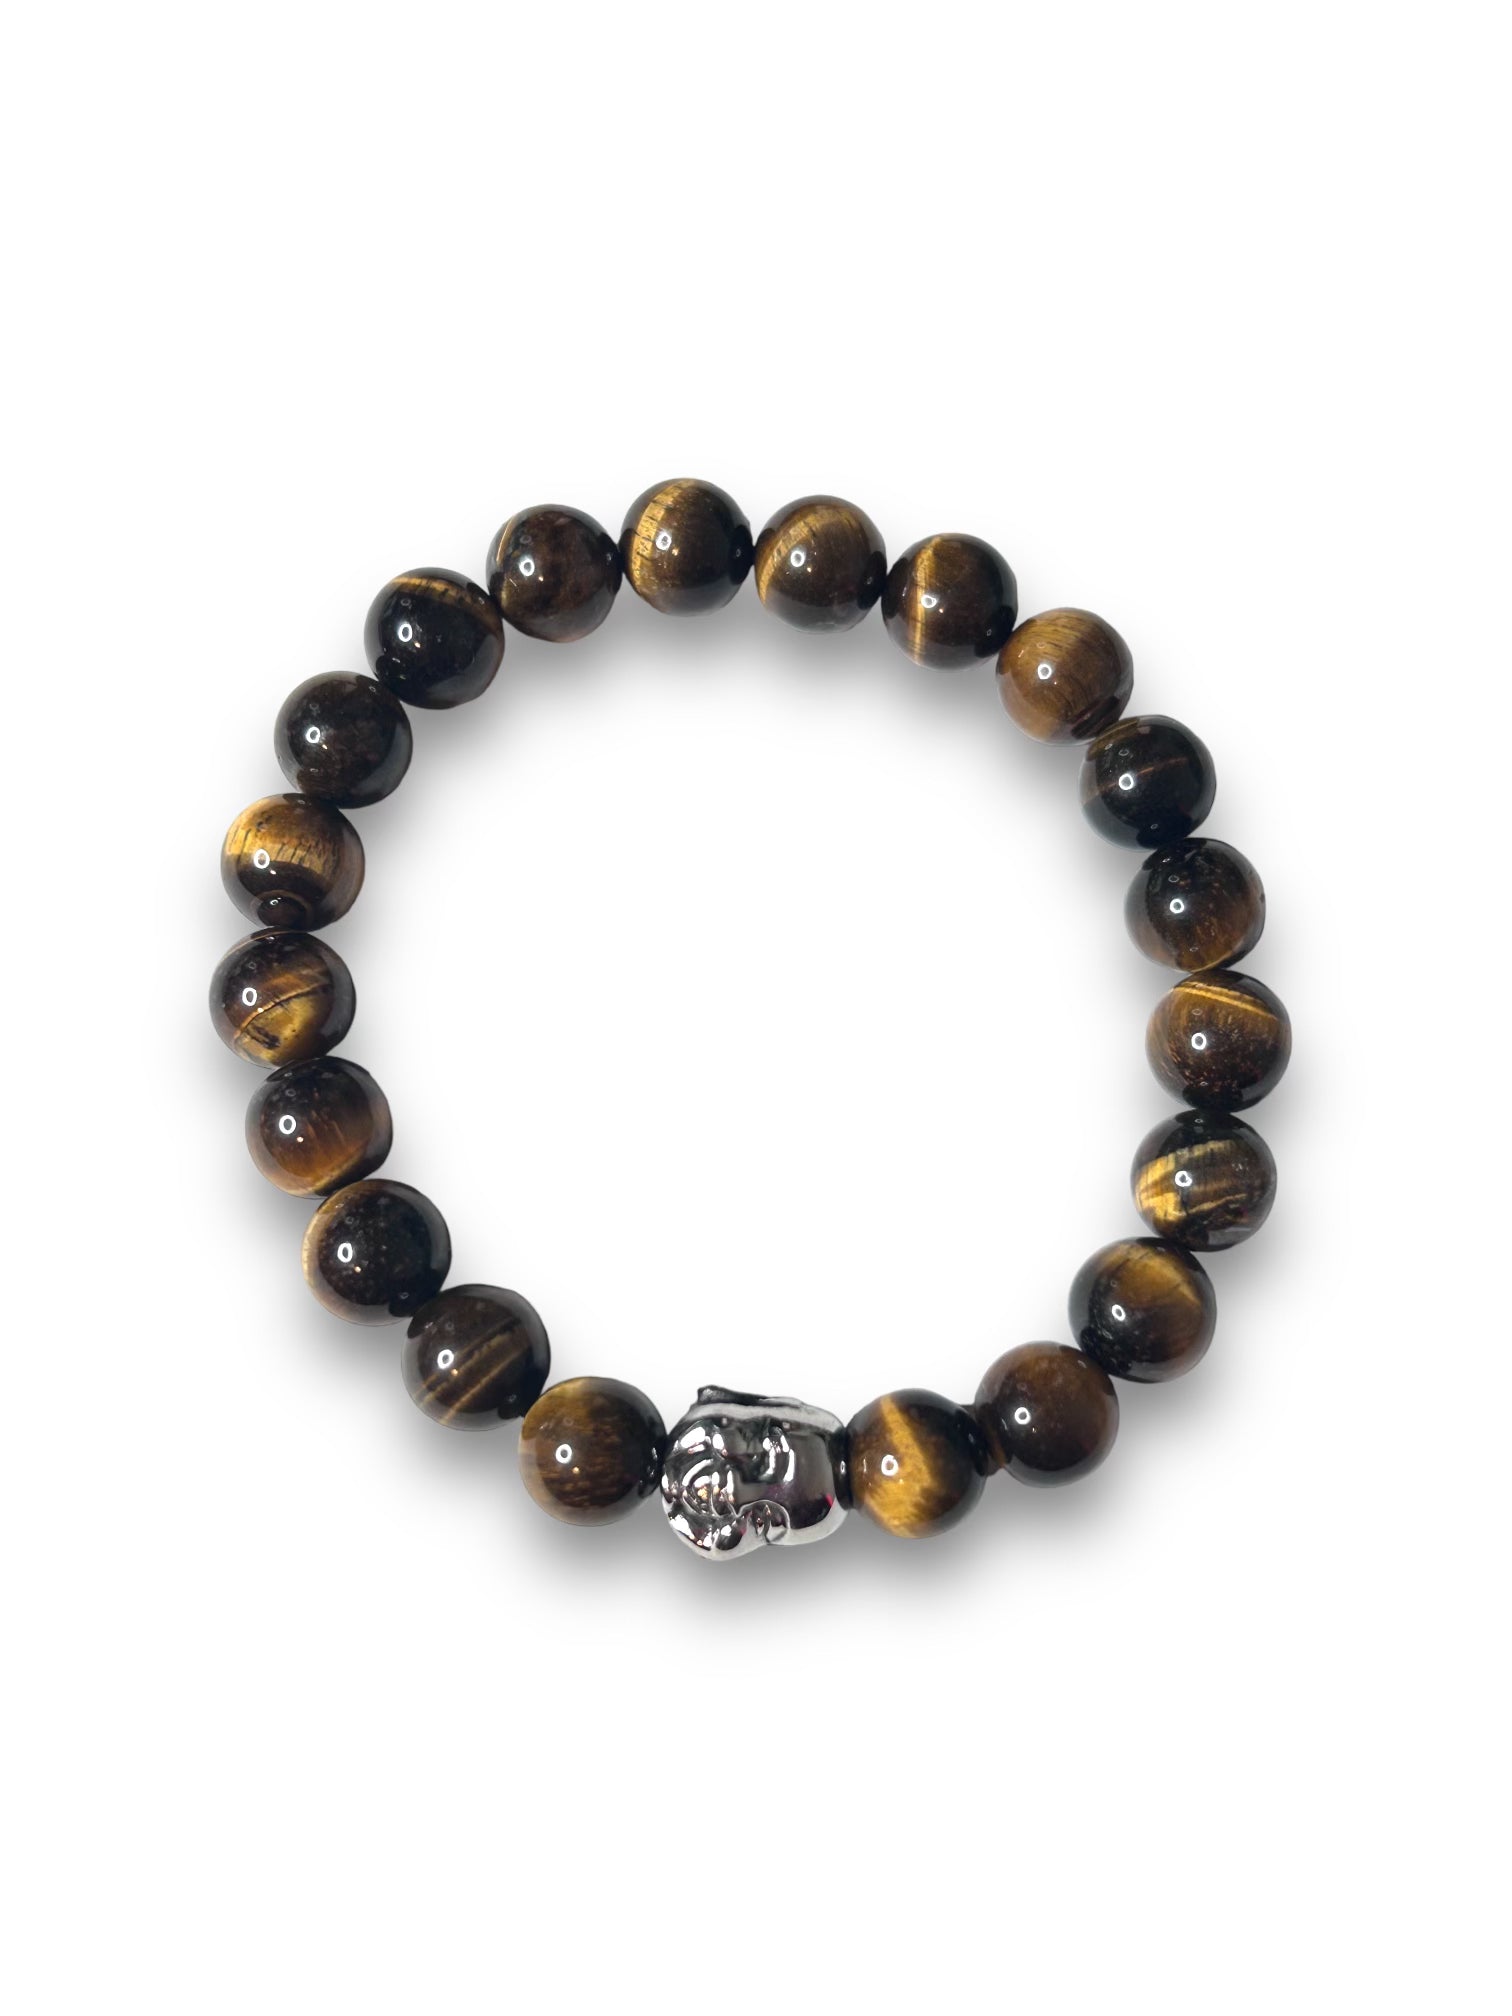 Silver Buddha Charm Bracelet with Beads